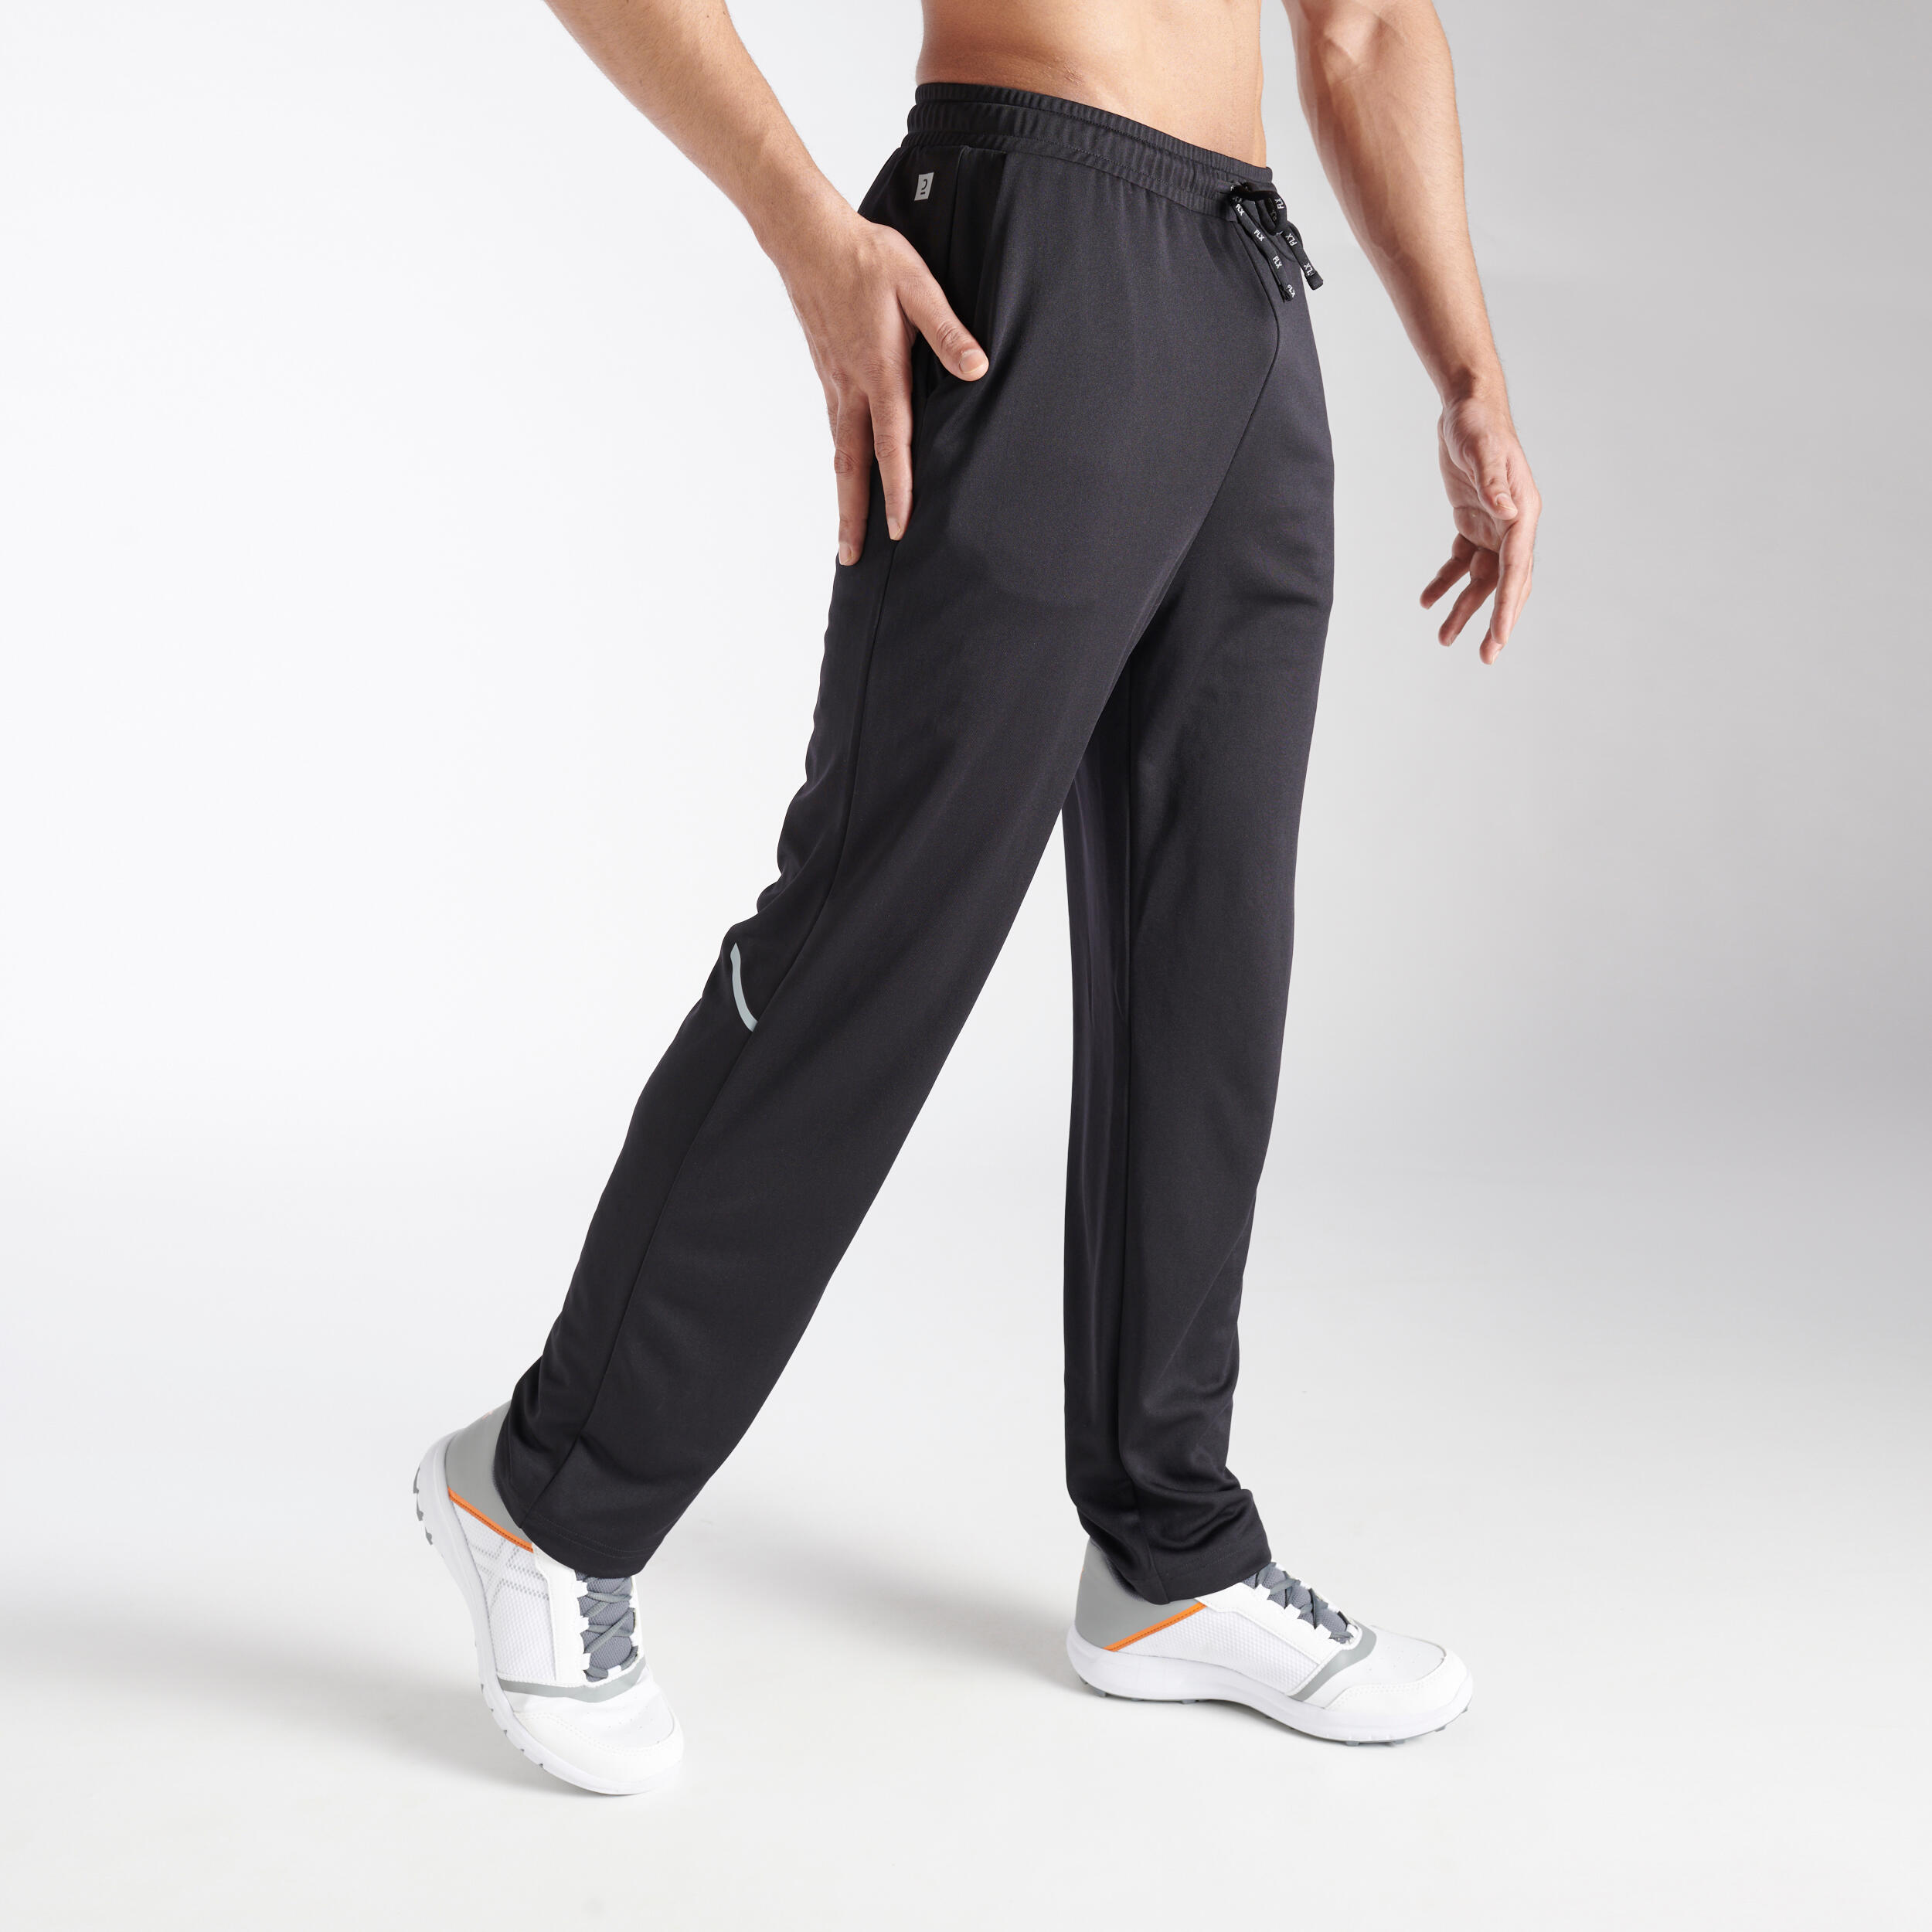 BALEAF Men's Cotton Yoga Sweatpants Open Bottom Joggers Straight Leg  Running Casual Loose Fit Athletic Pants With Pockets Black M - Walmart.com